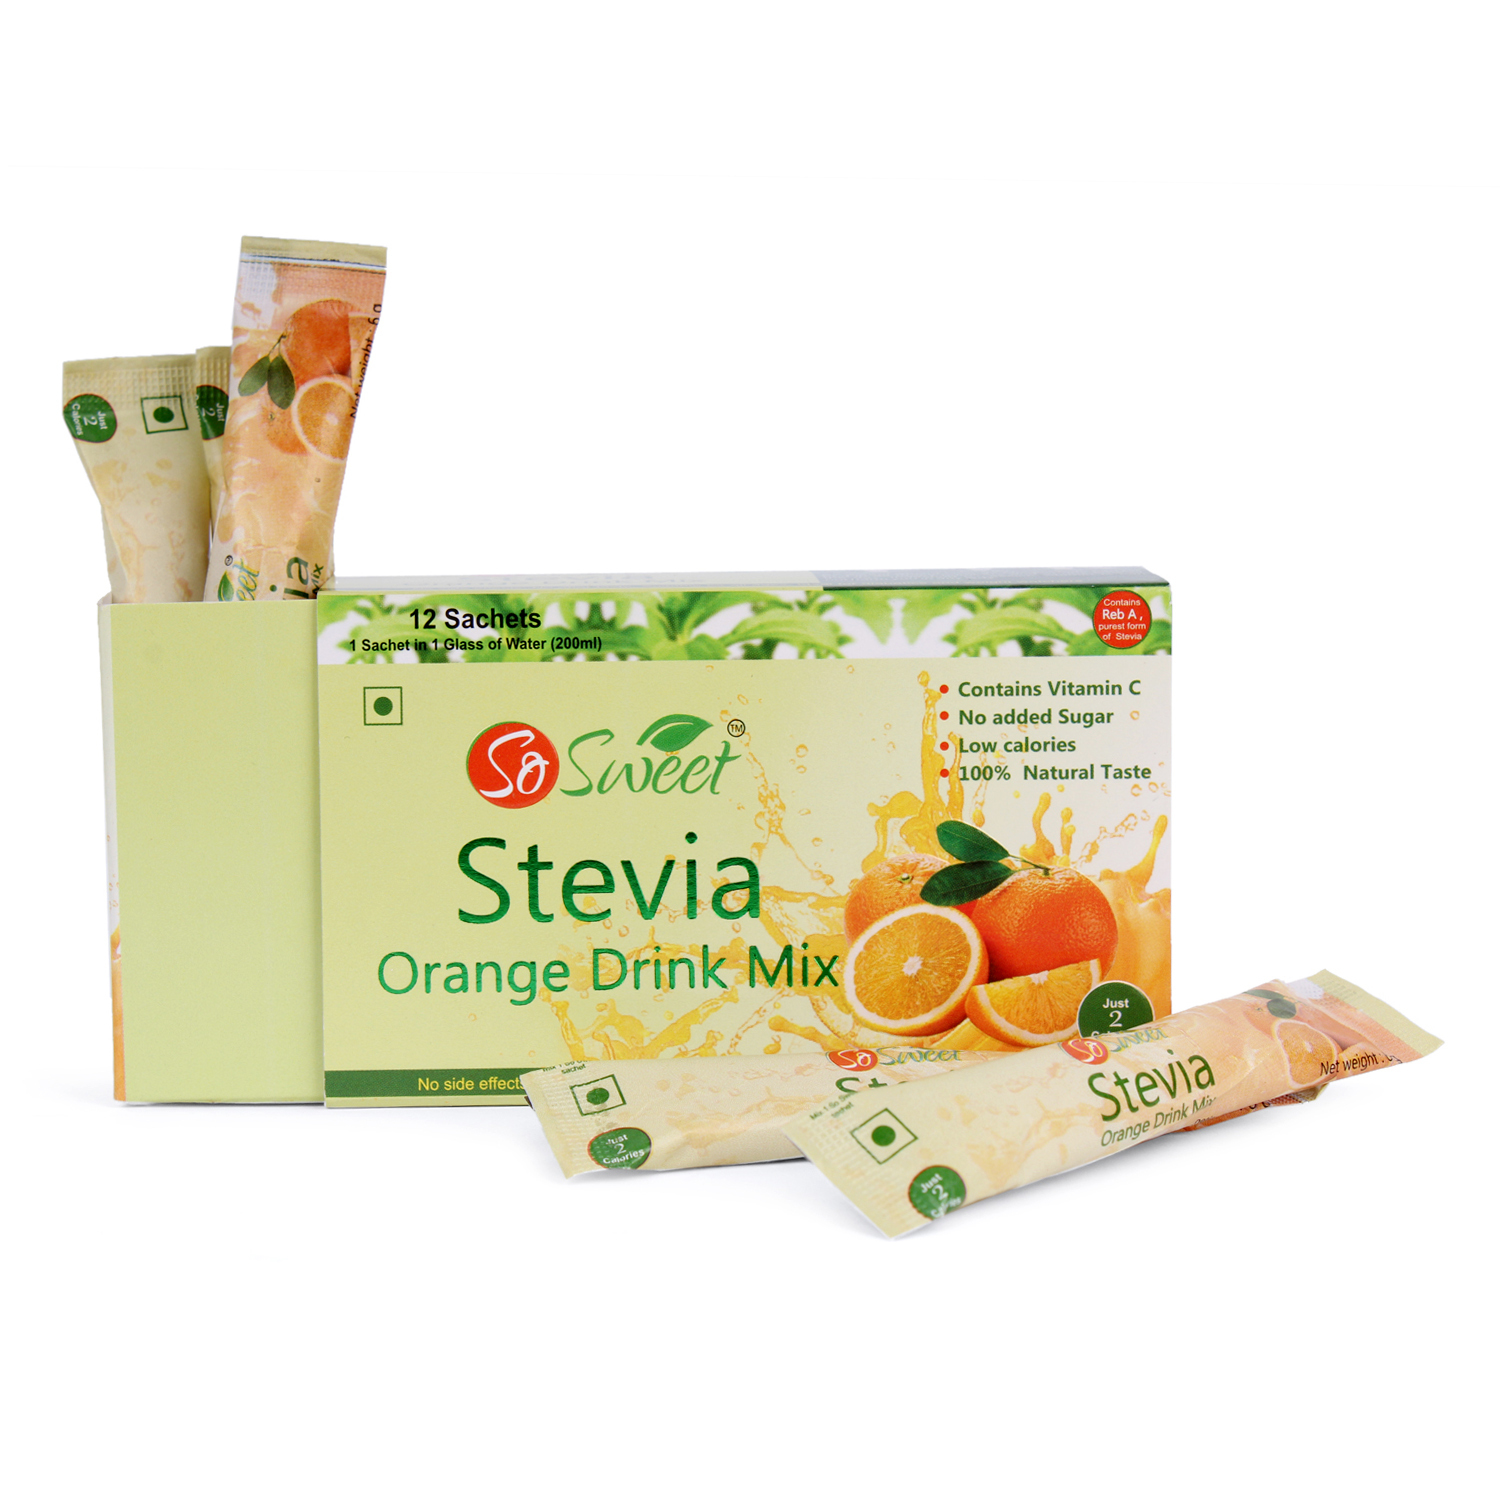 So Sweet Stevia Orange Drink Mix 12 sachets